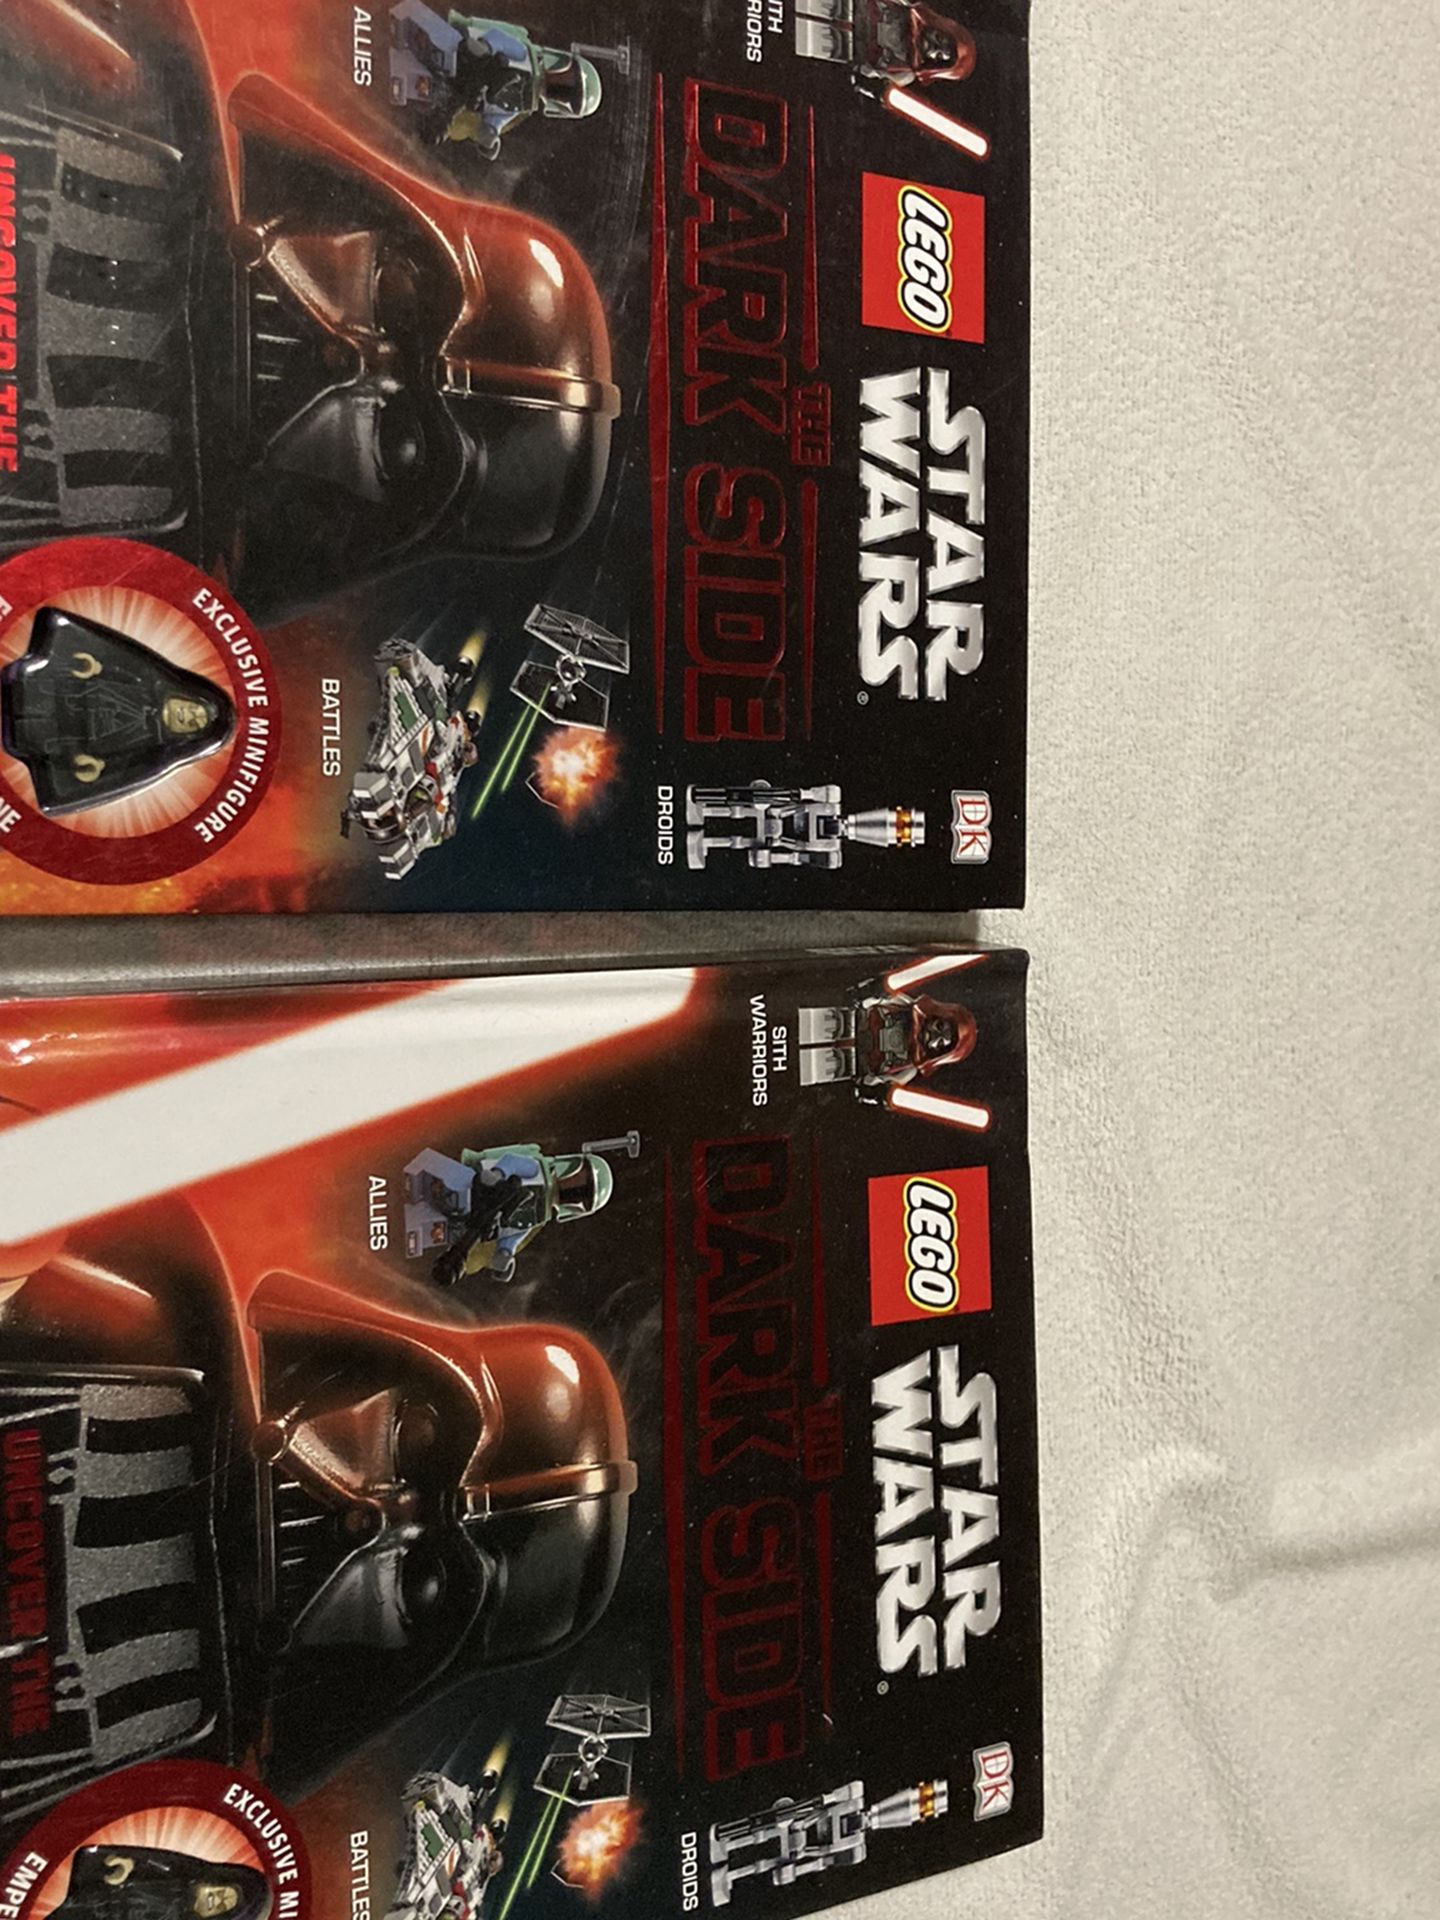 Two Star Wars Legos Books W/ Figure